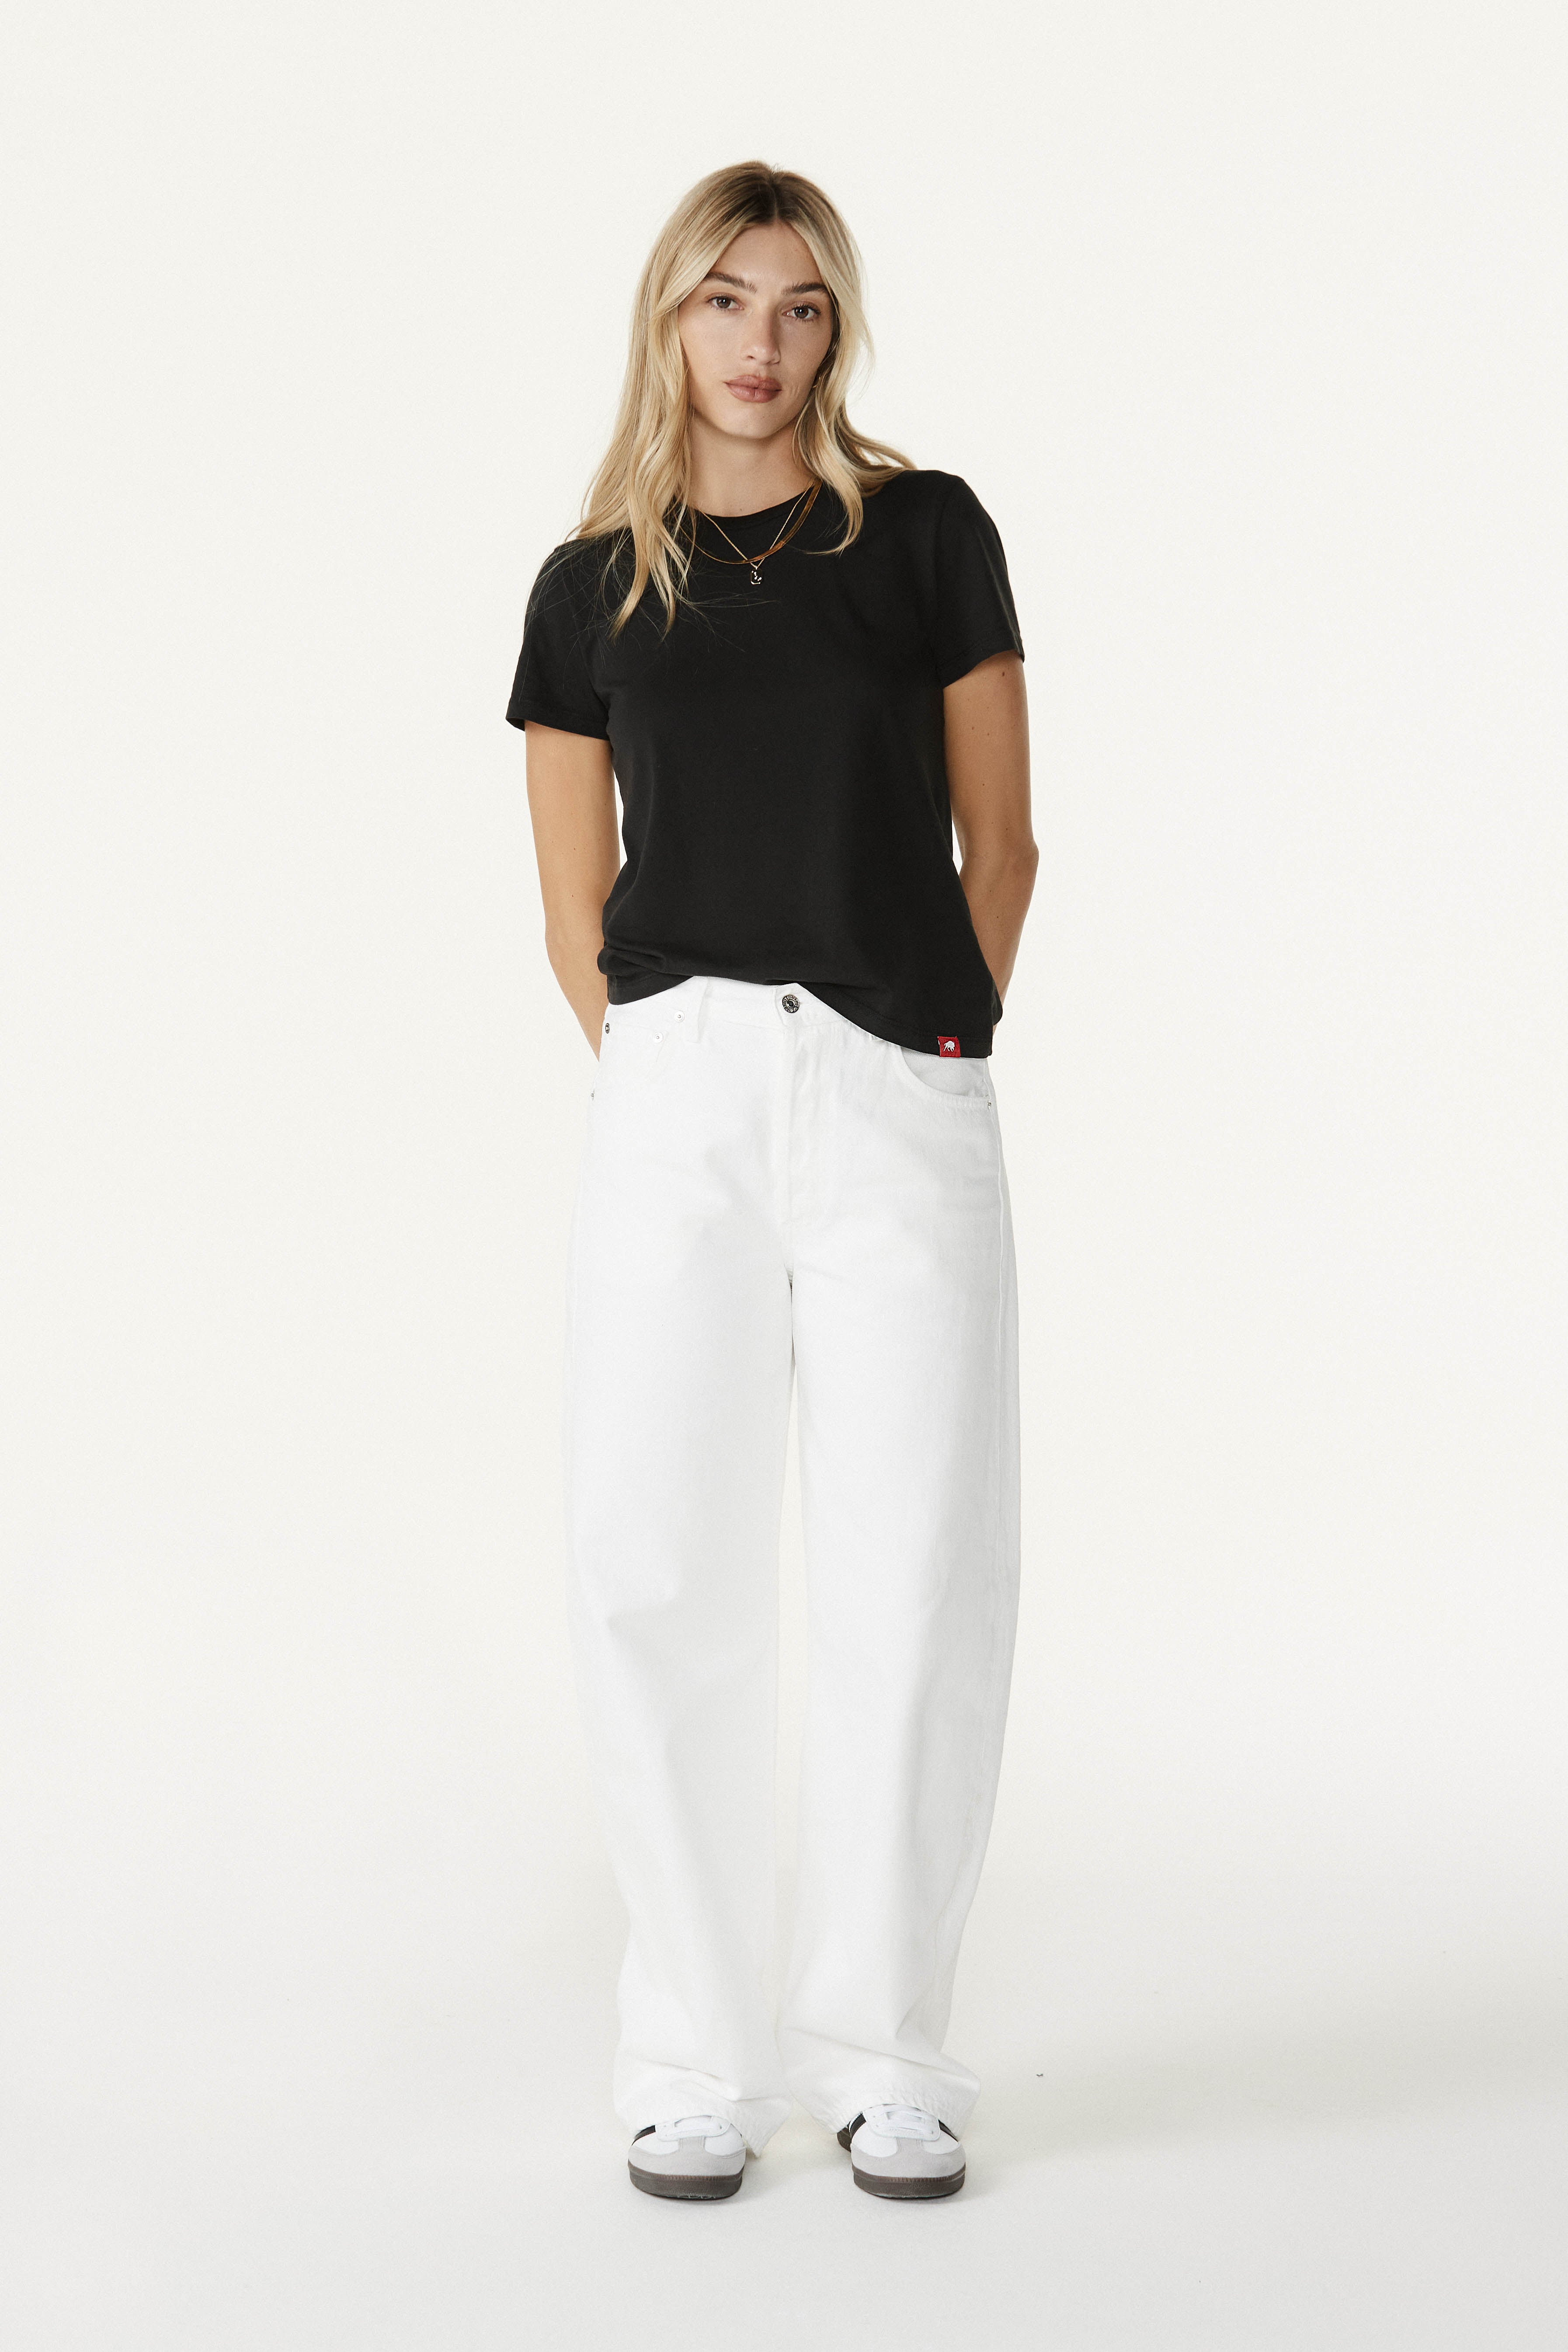 Sportiqe La Kings Women's Phoebe Holbrook T-Shirt M / Gray